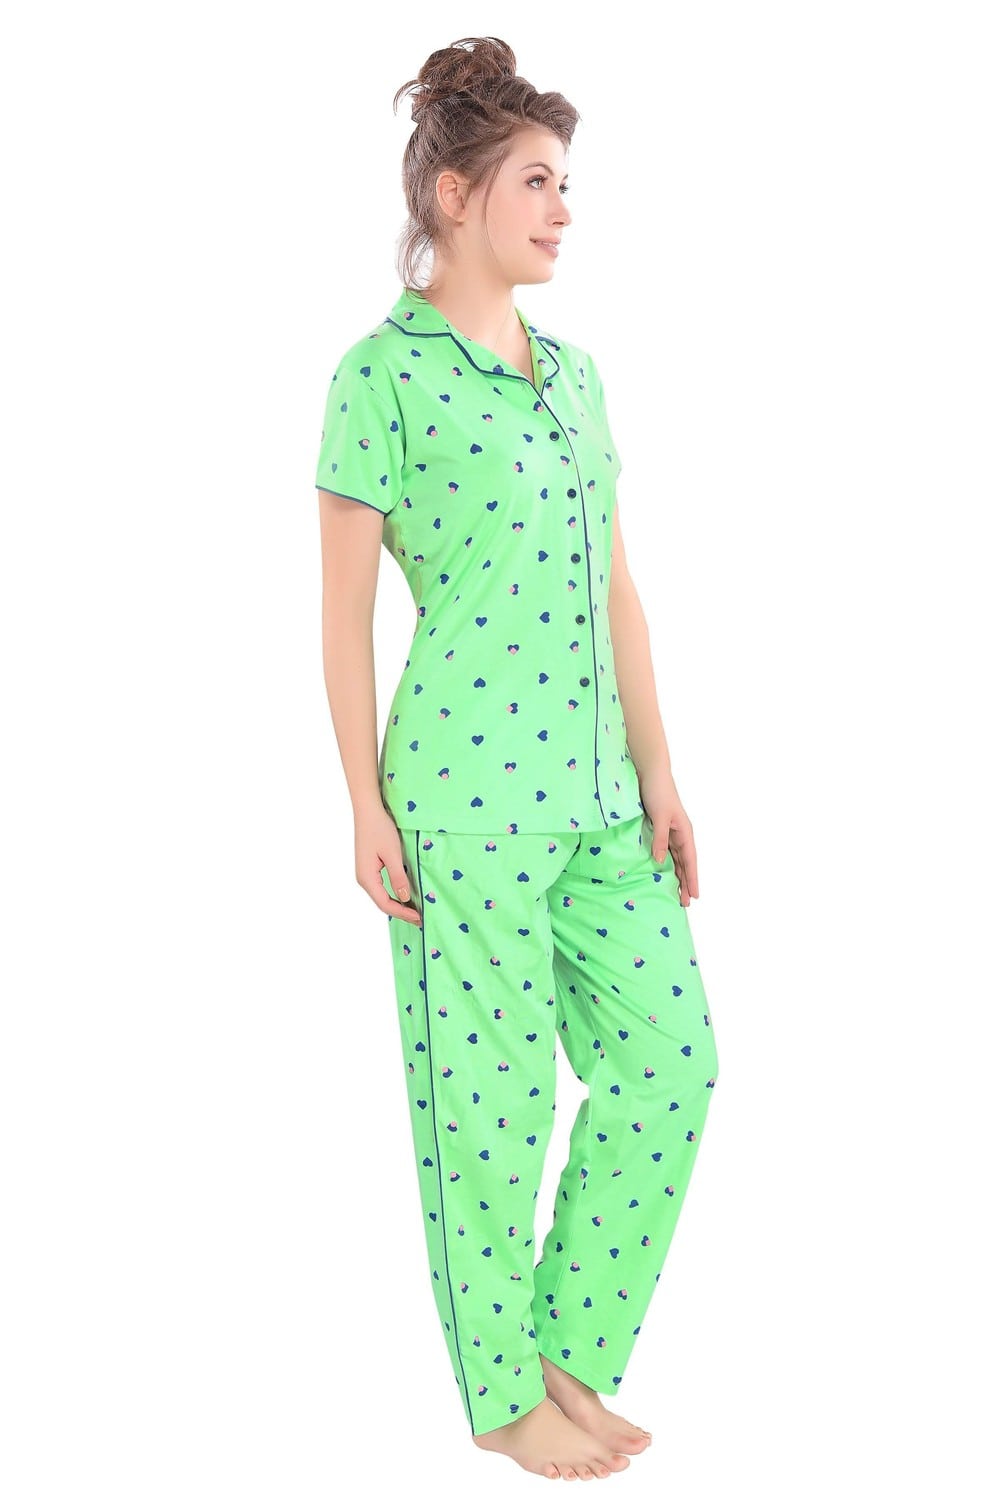 Pierre Donna Women's Cotton Pajama set With Pants - Women Sleepwear Green Color AVL - Dealz Souq